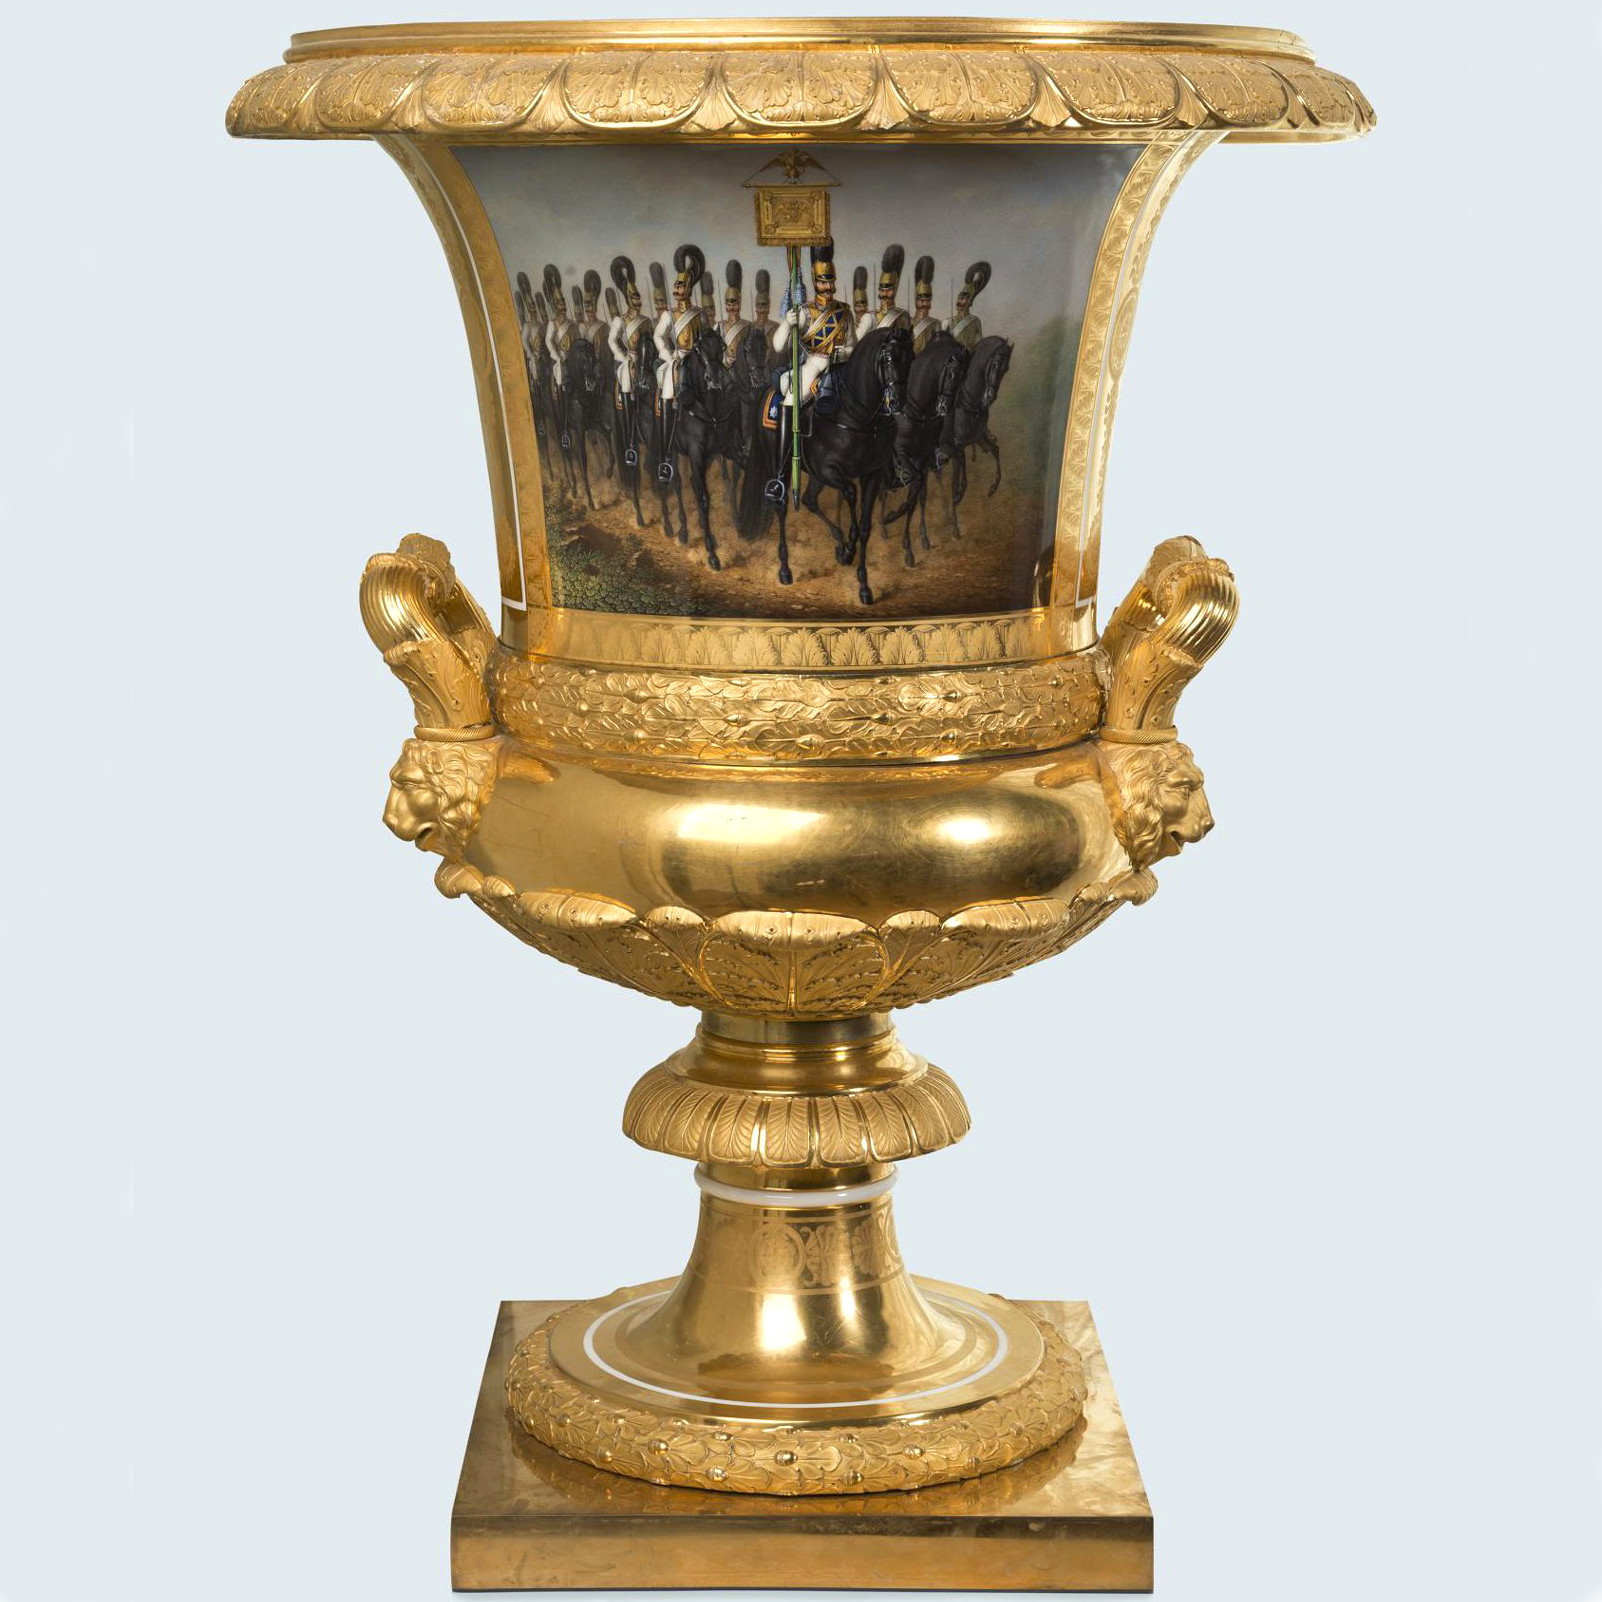 Russian Imperial Porcelain military vase - Life-Guard Horse Regiment